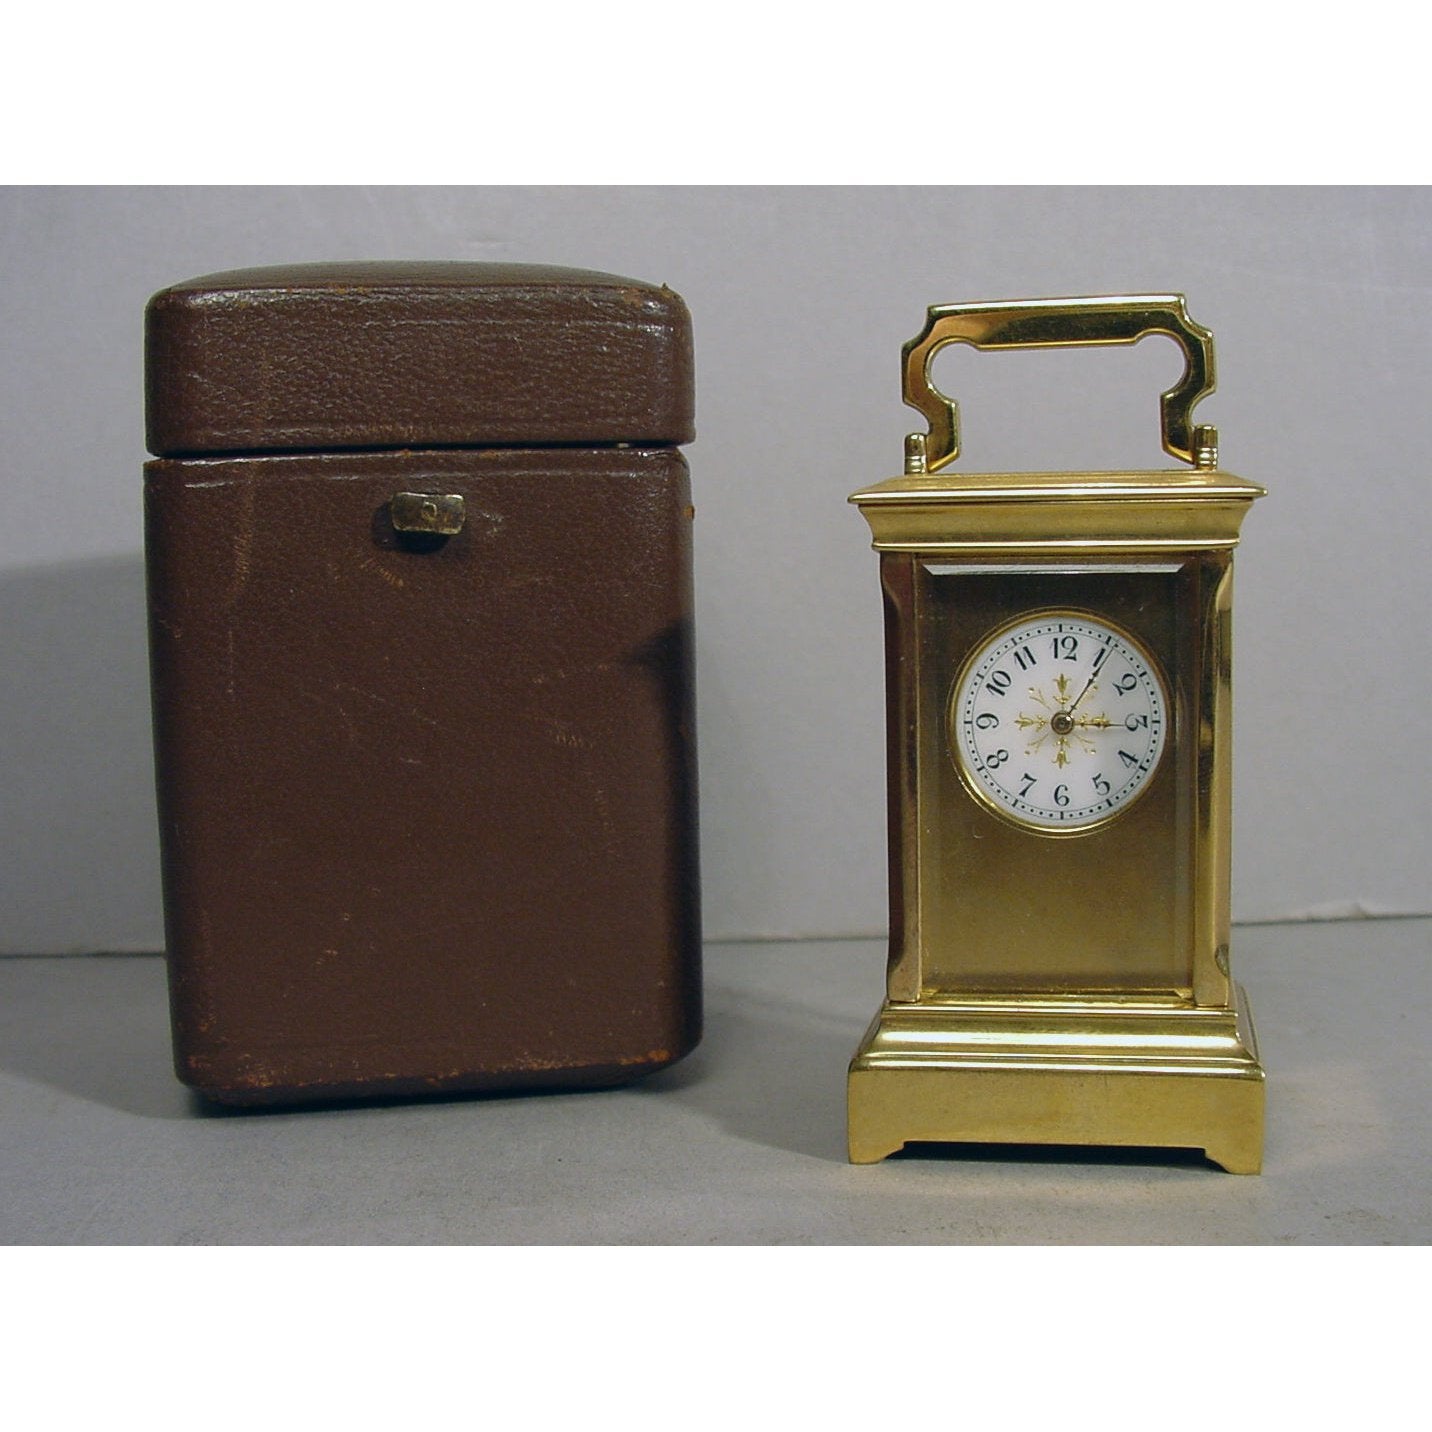 Eight-Day Miniature Gilt-Brass Carriage Clock with Original Case